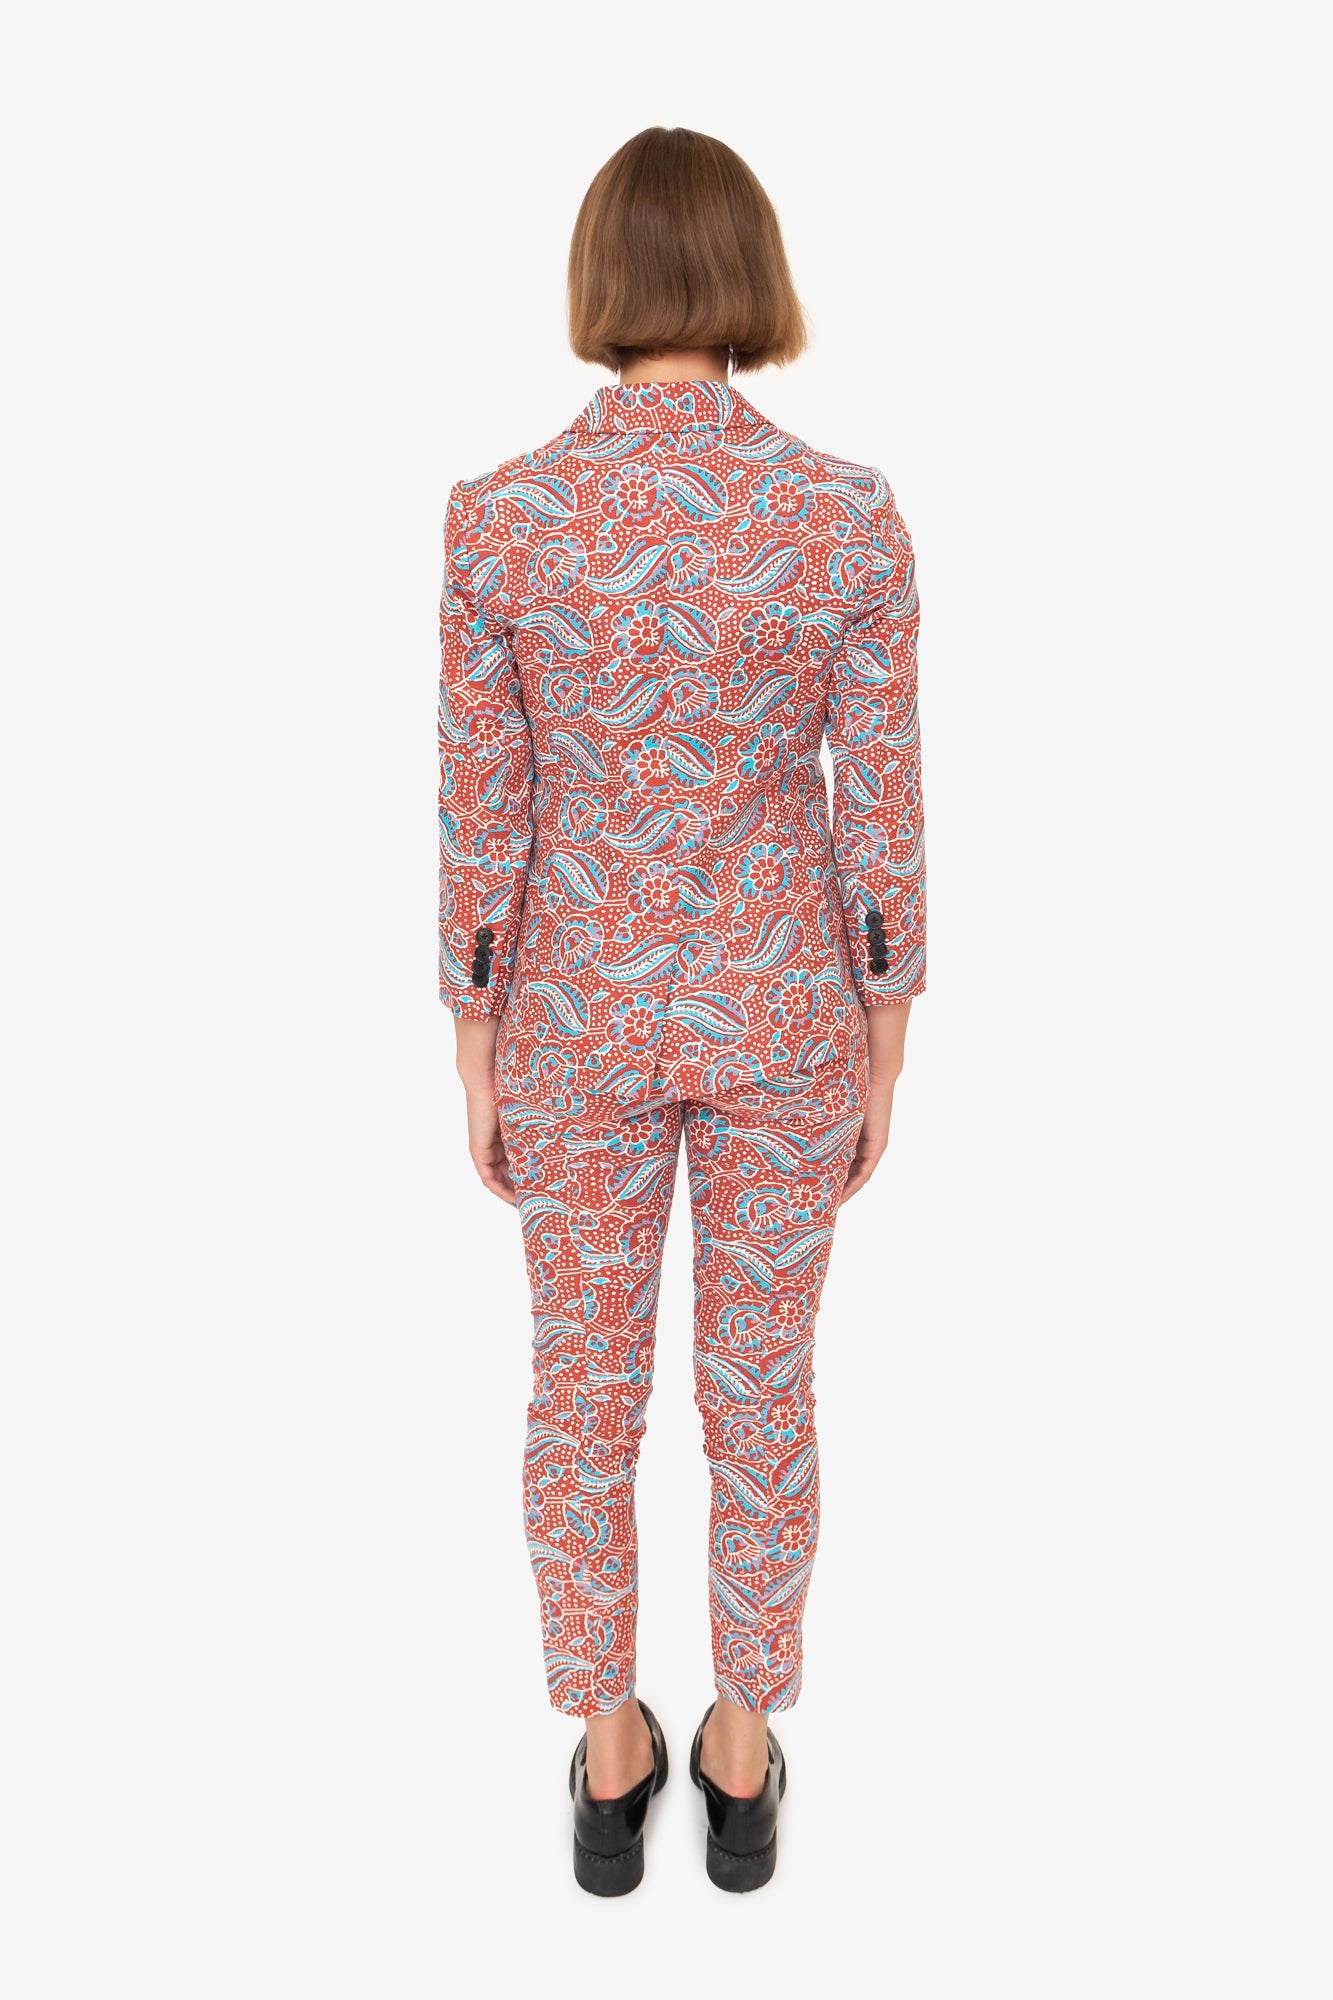 Floral + Paisley Printed Suit